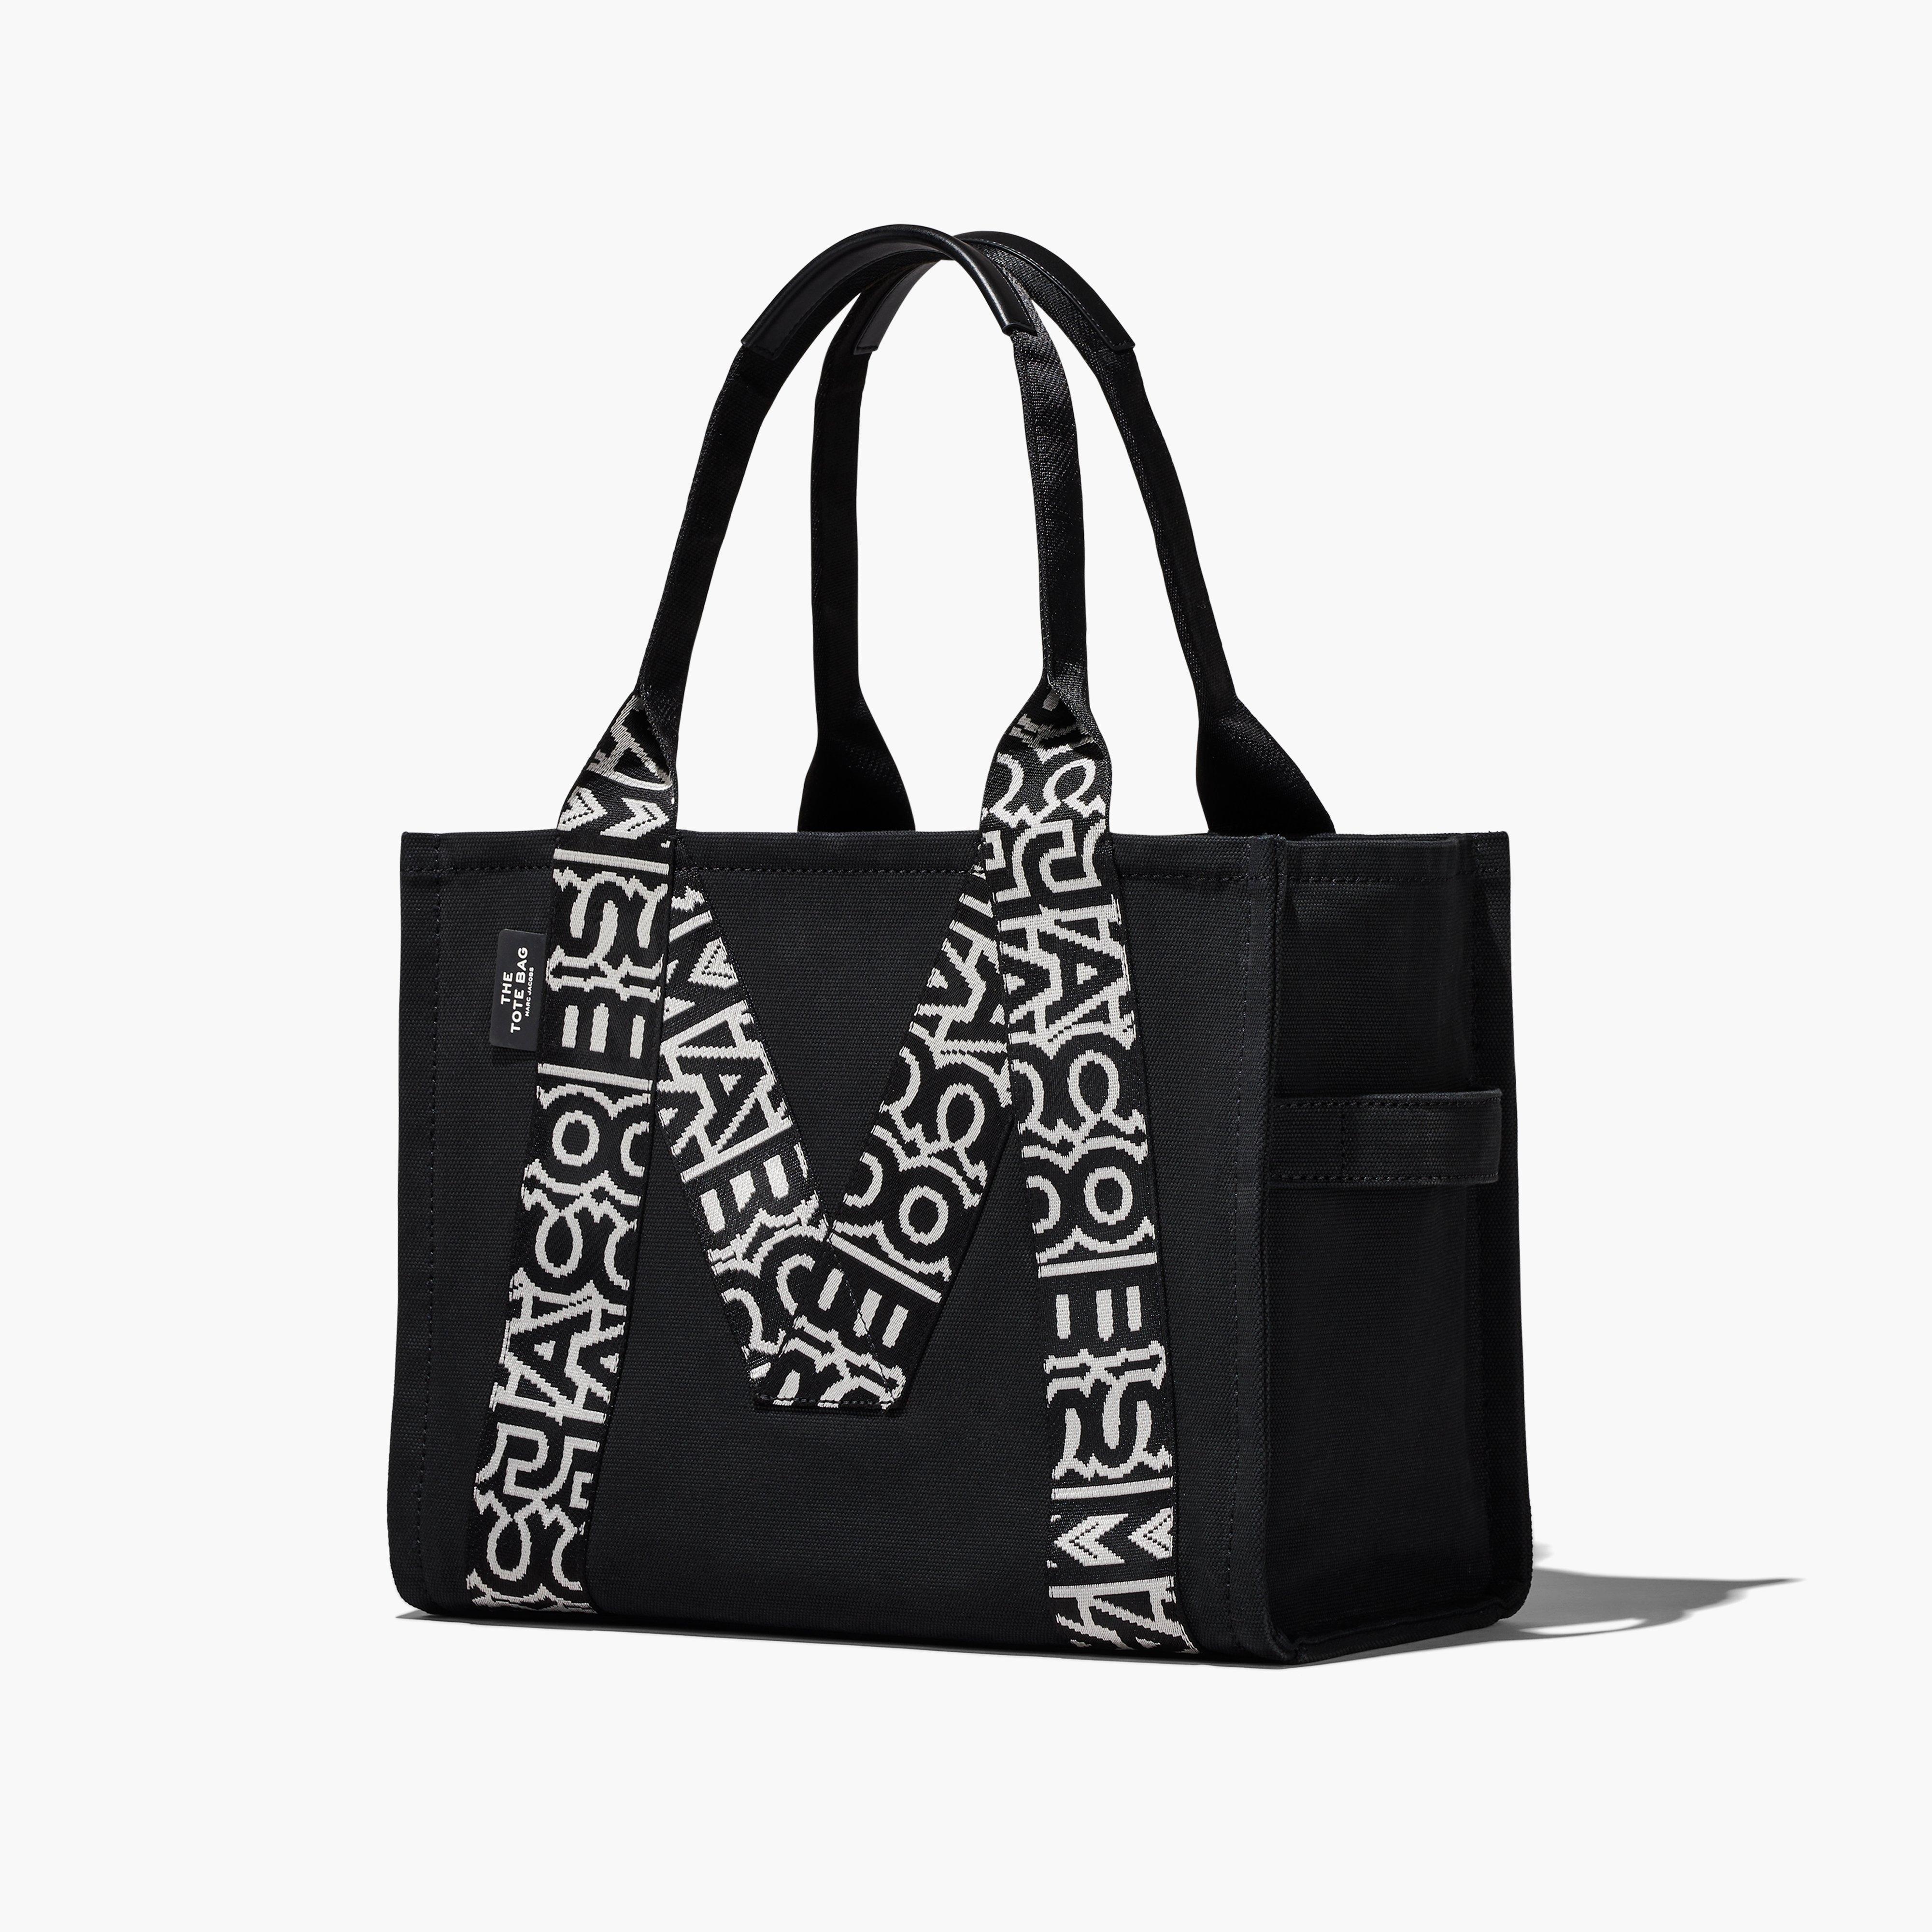 Marc Jacobs Graffiti Bag